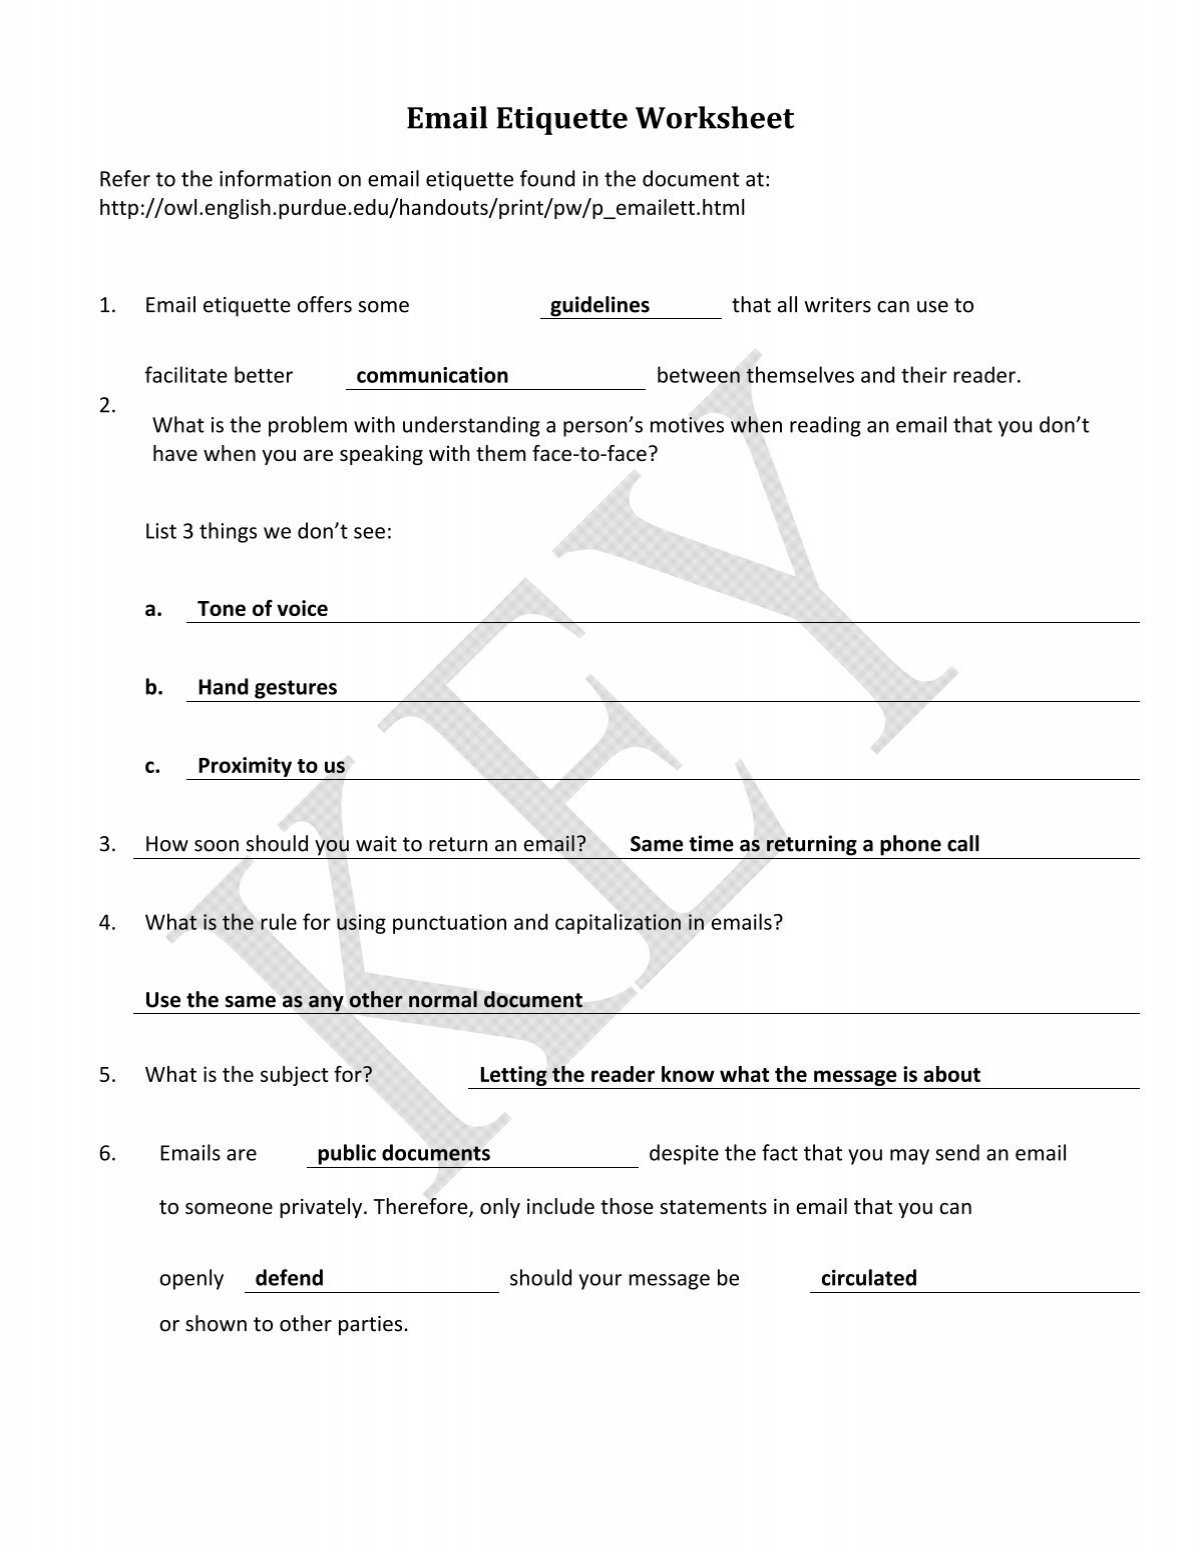 Email Etiquette Worksheet Key pdf